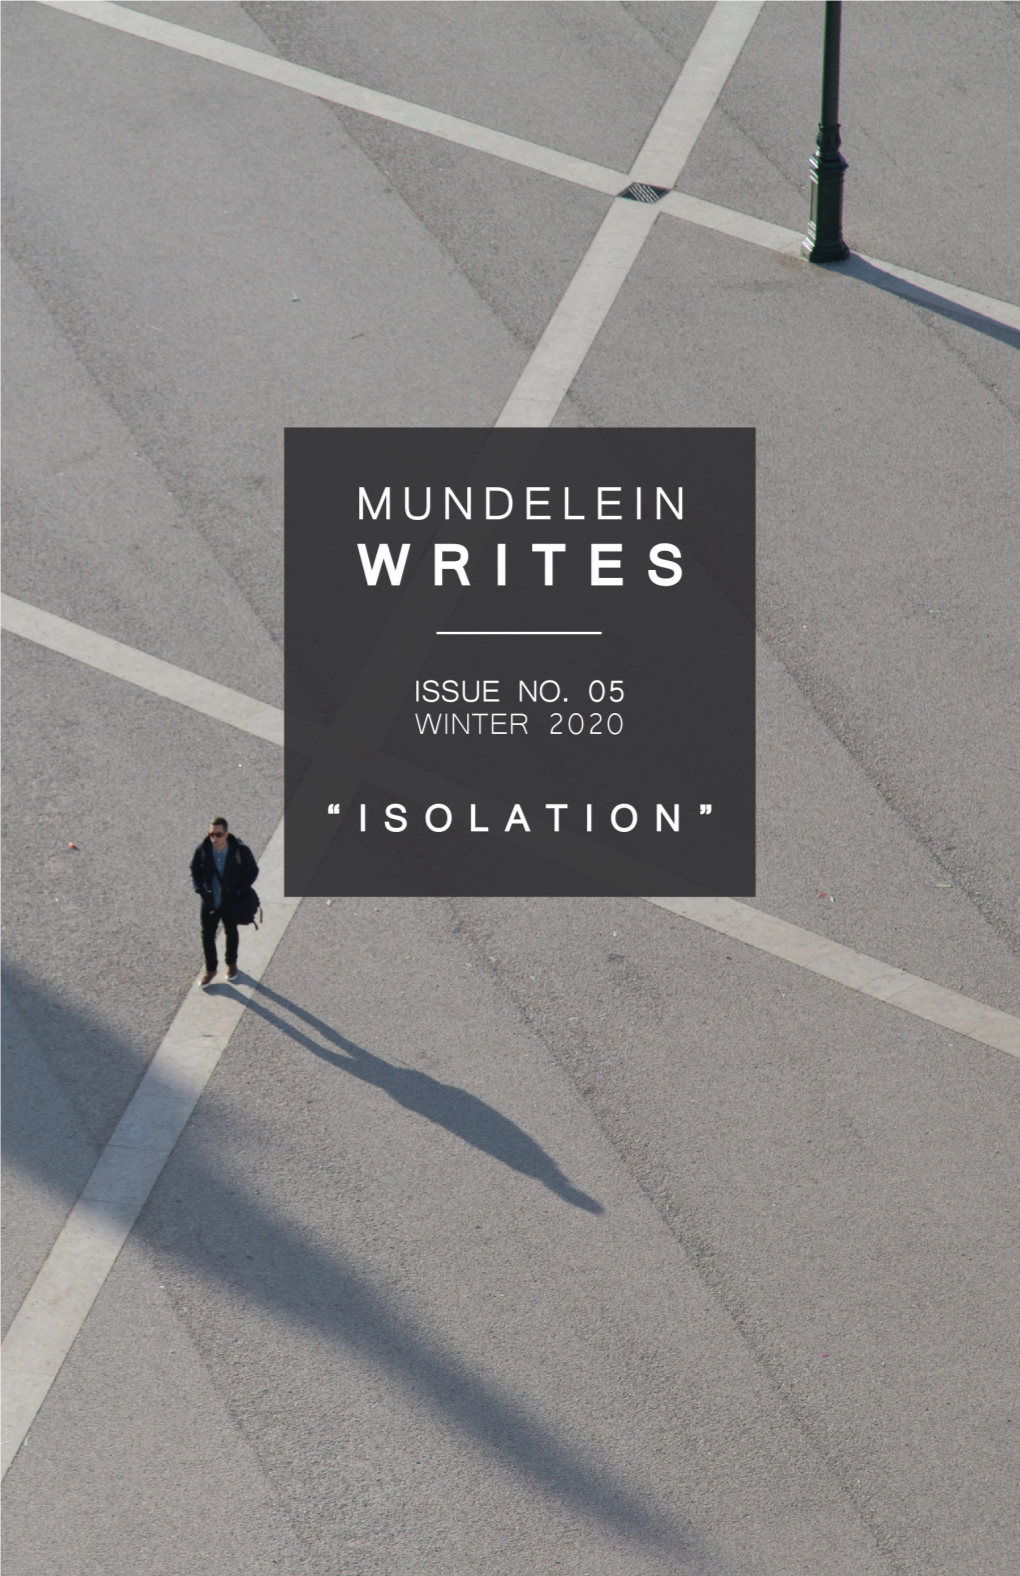 Issue No. 05: “Isolation” Winter 2020